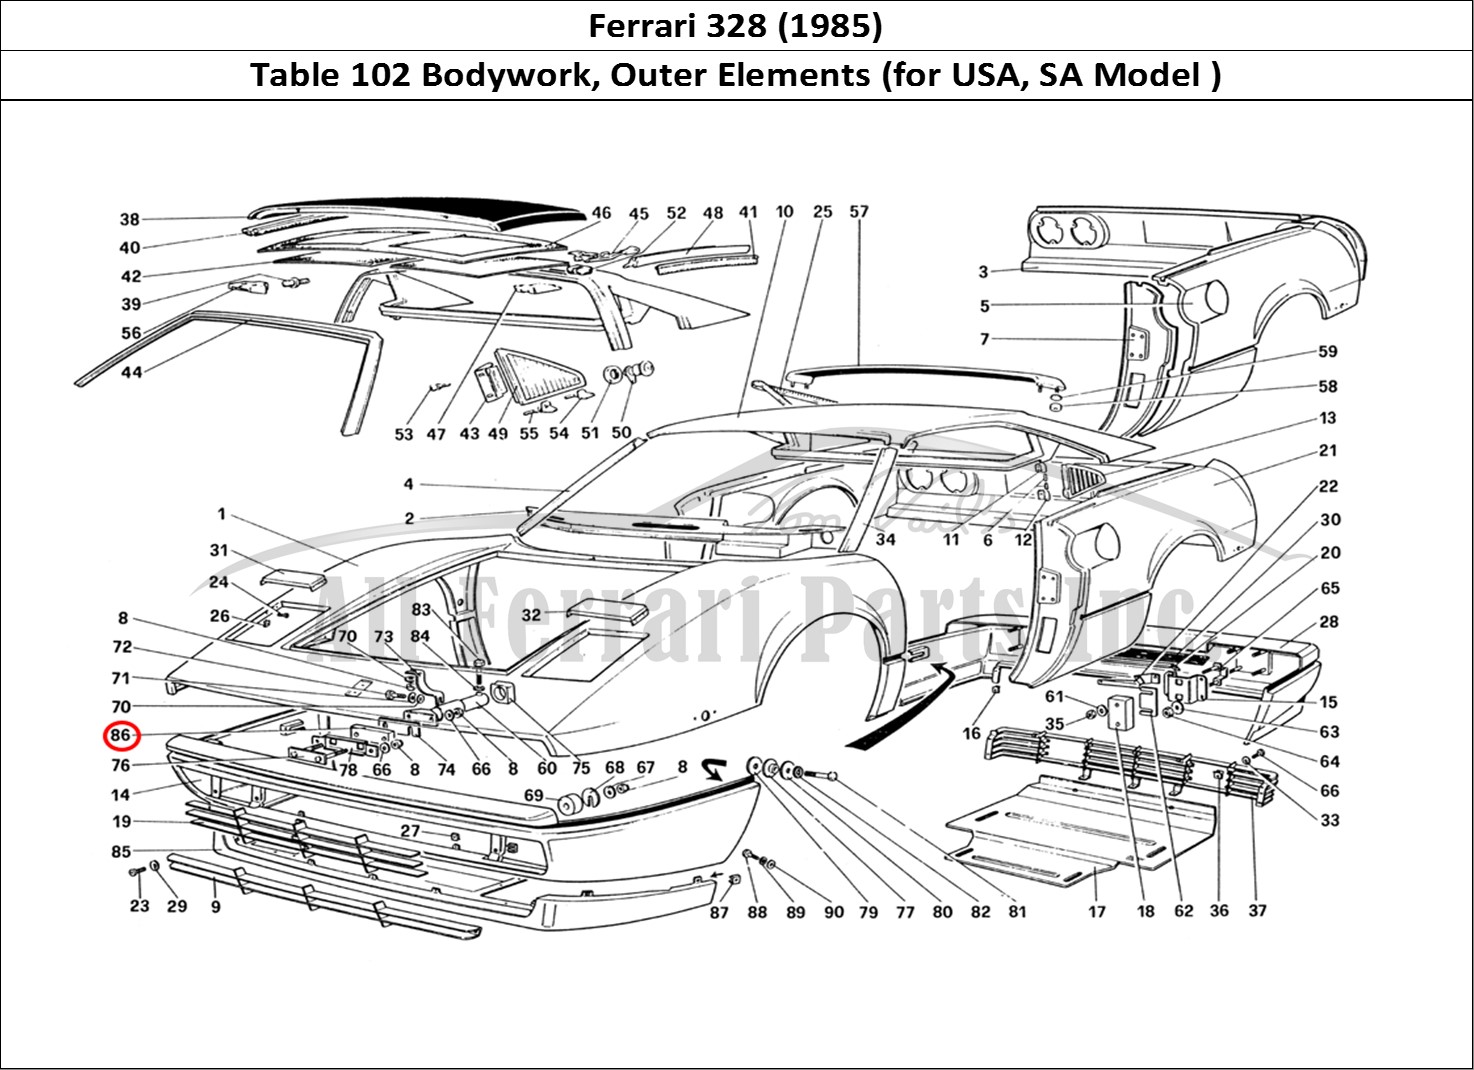 Ferrari Parts Ferrari 328 (1985) Page 102 Body Shell - Outer Elemen